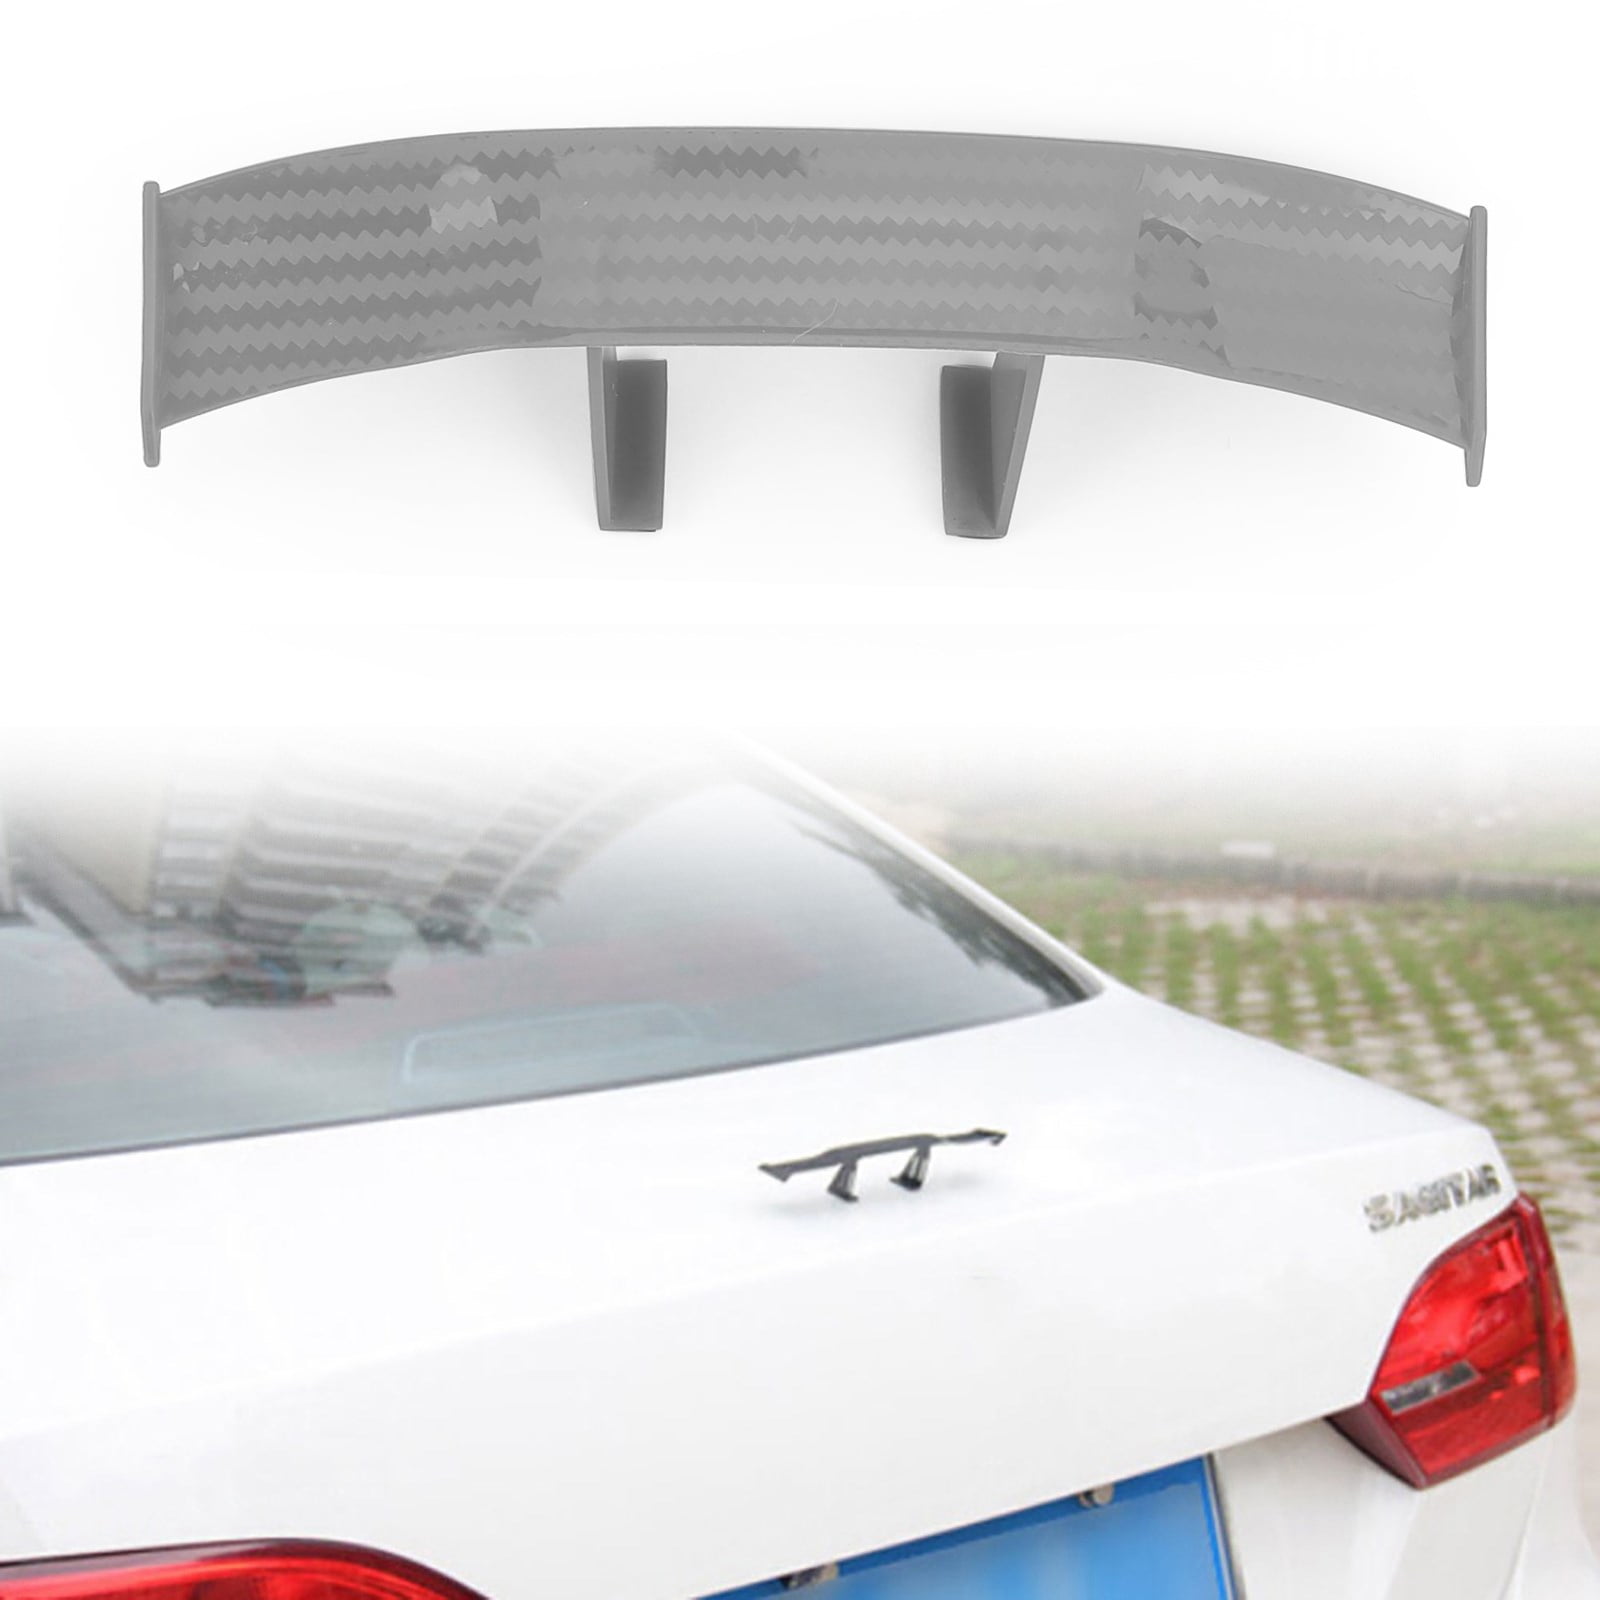  idain Universal Car Mini Spoiler Wing Small Model Carbon Fiber  Auto Car Tail Decoration Spoiler Wing : Automotive